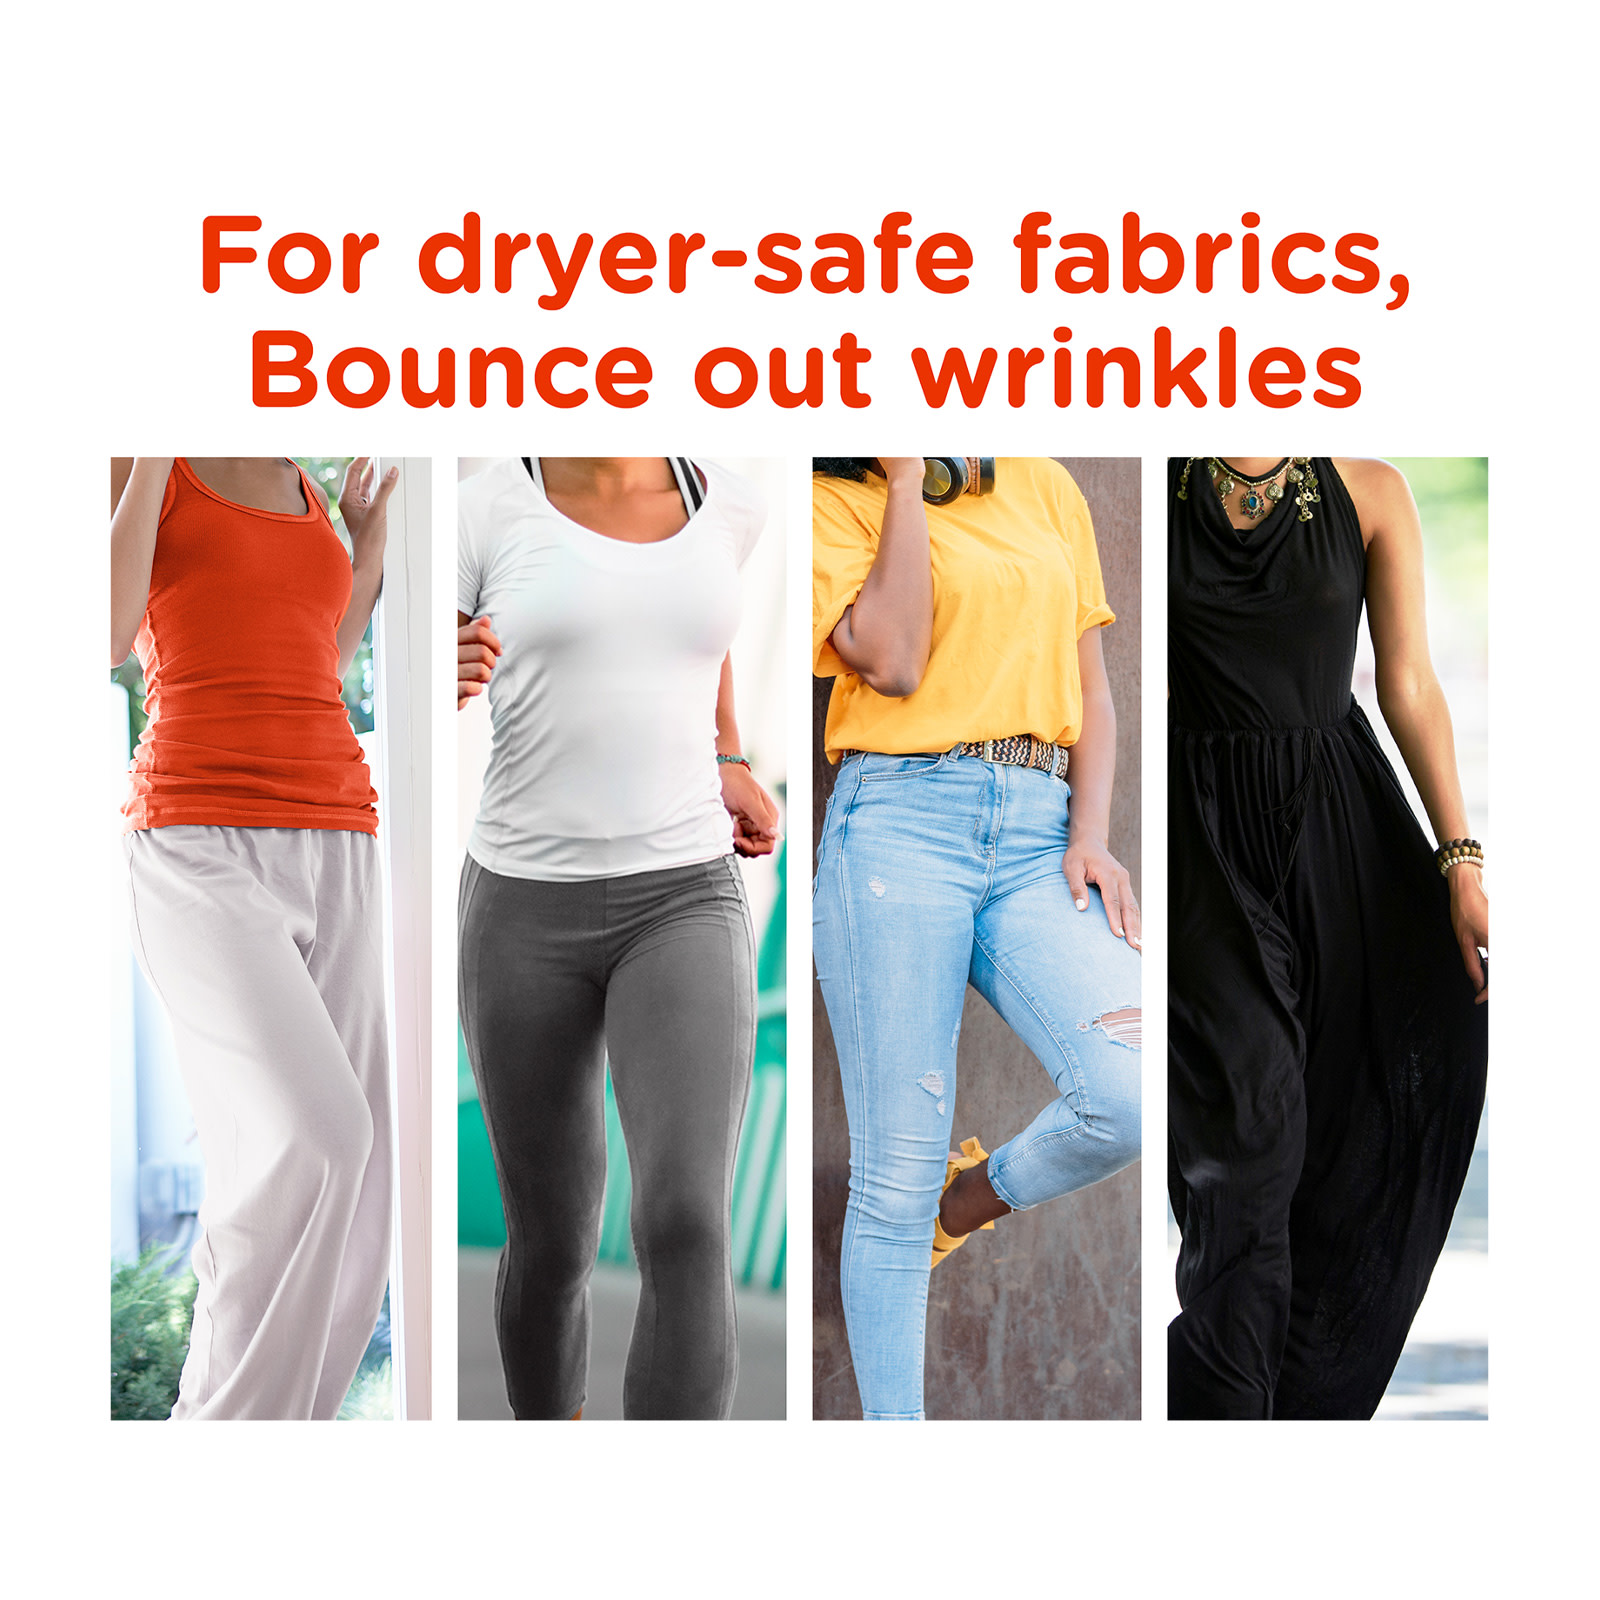 Bounce® WrinkleGuard Mega Sheet Outdoor Fresh Dryer Sheets